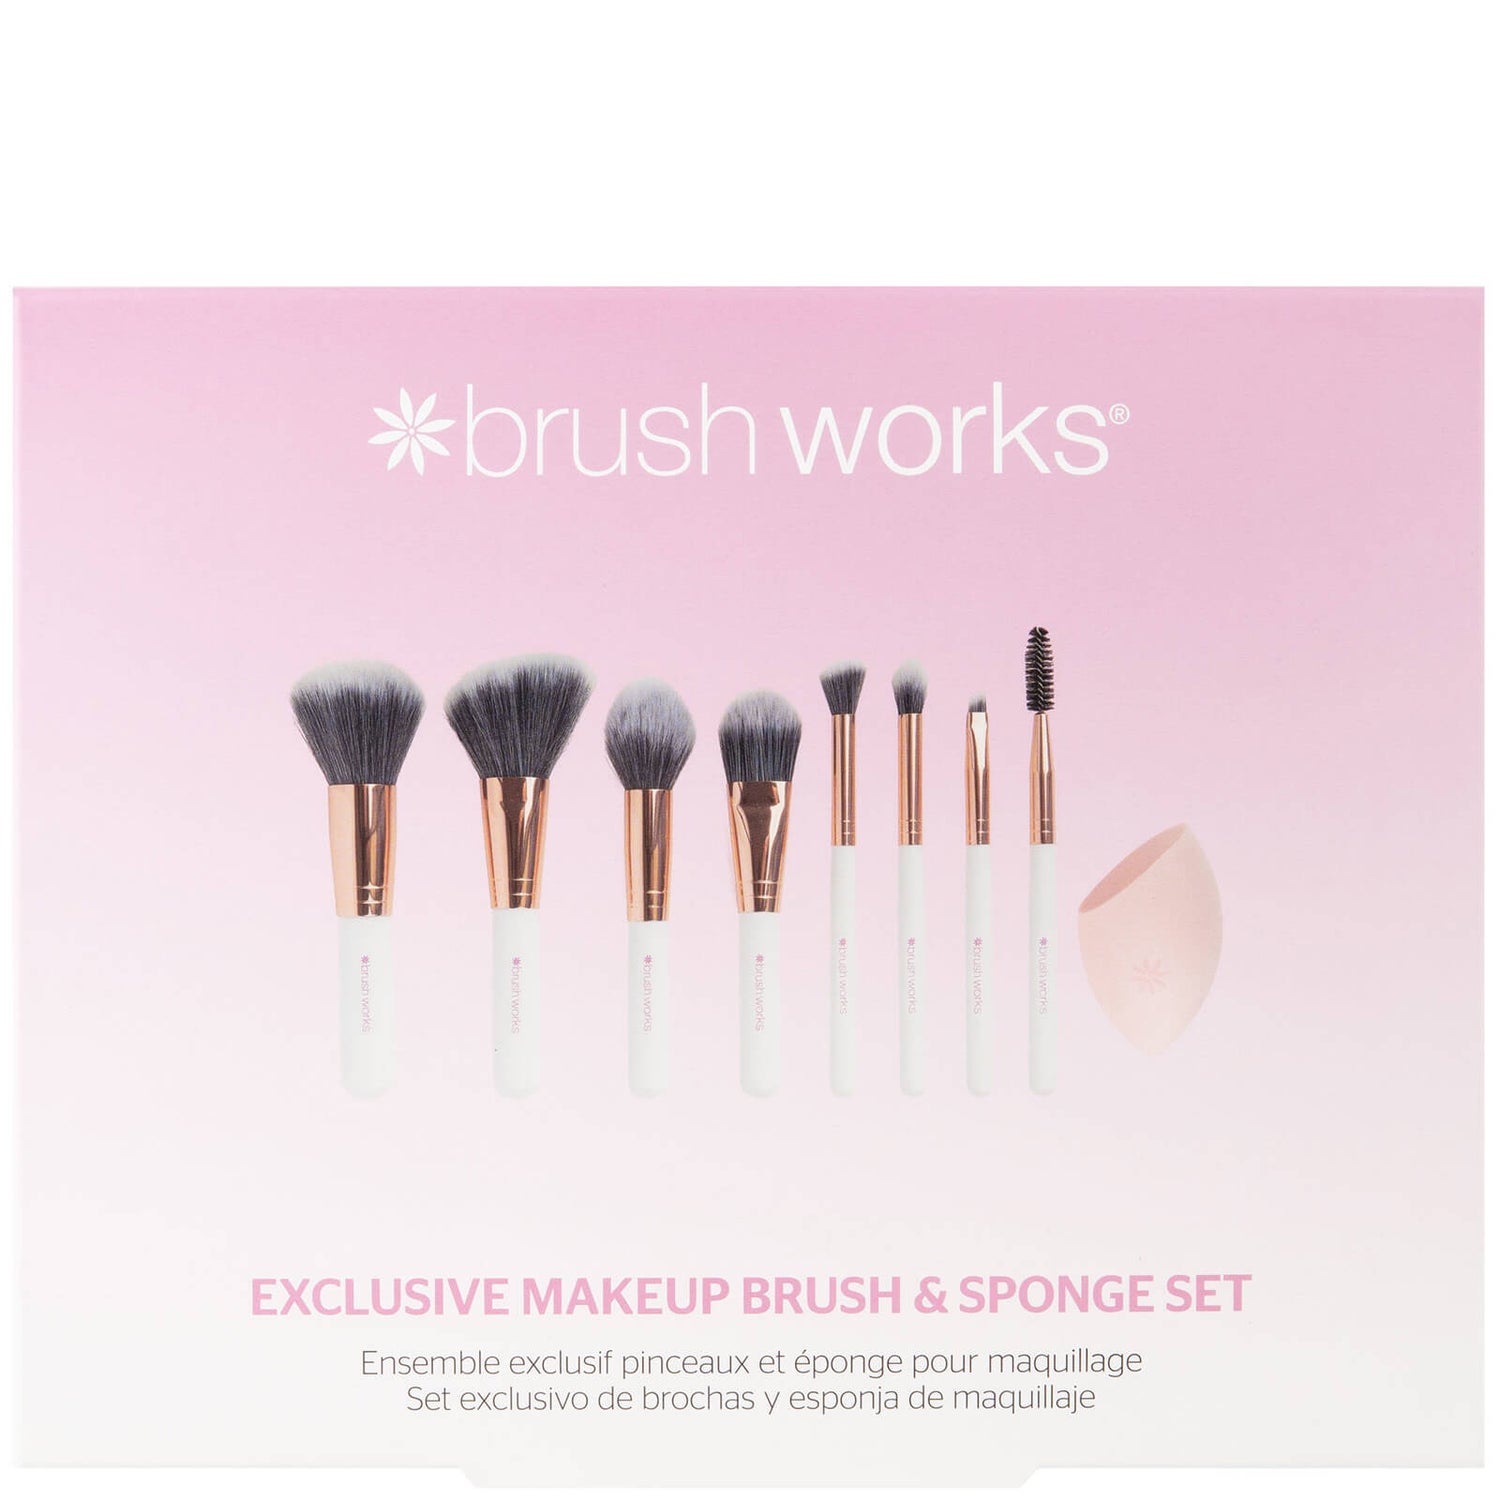 brushworks Exclusive Makeup Brush and Sponge Set (Worth £39.99)